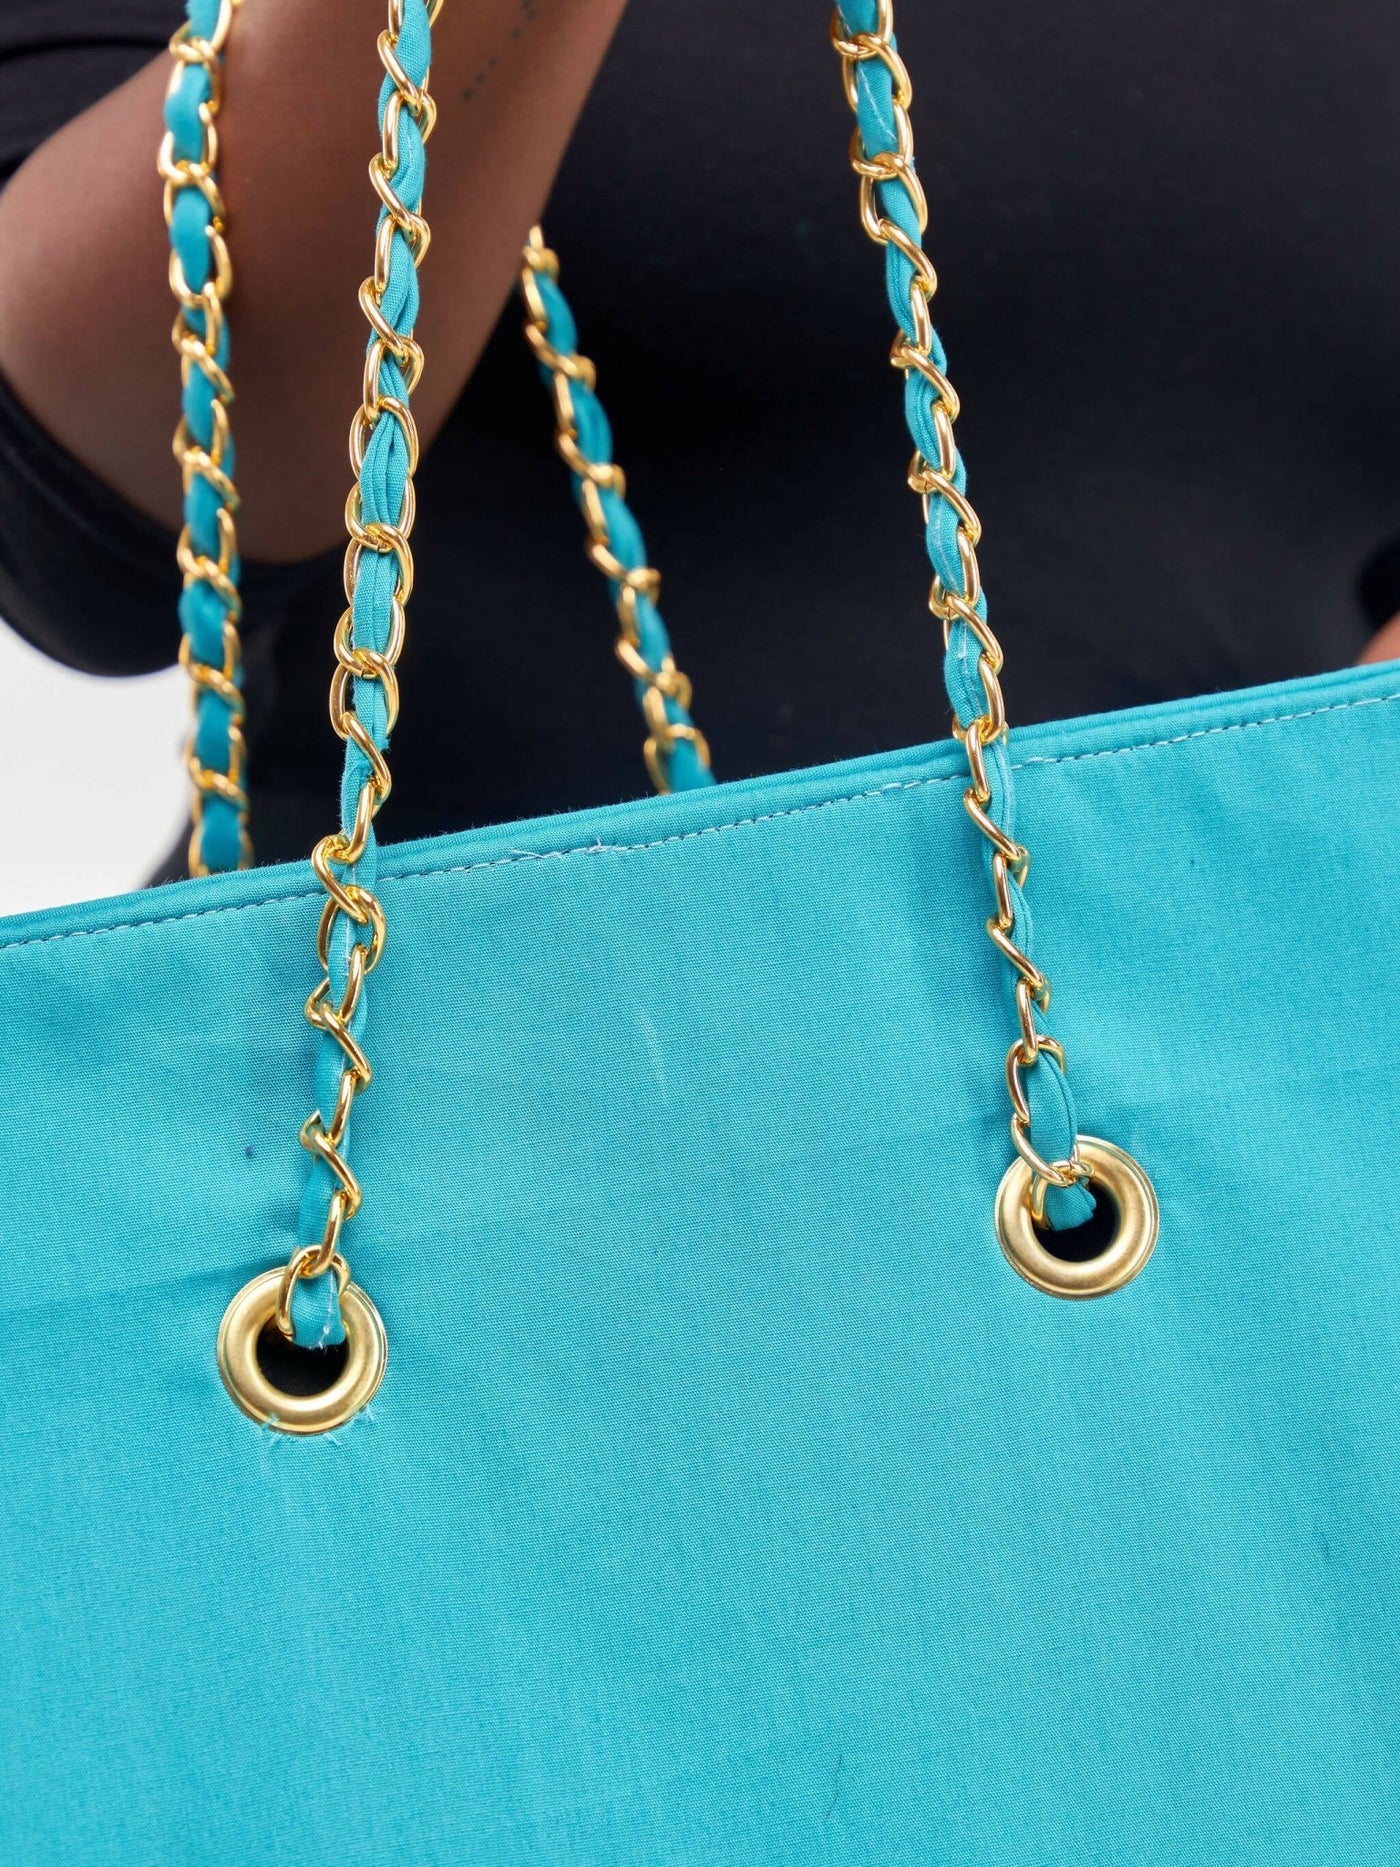 Kay Designs Chained Handbag -Turquoise - Shopzetu